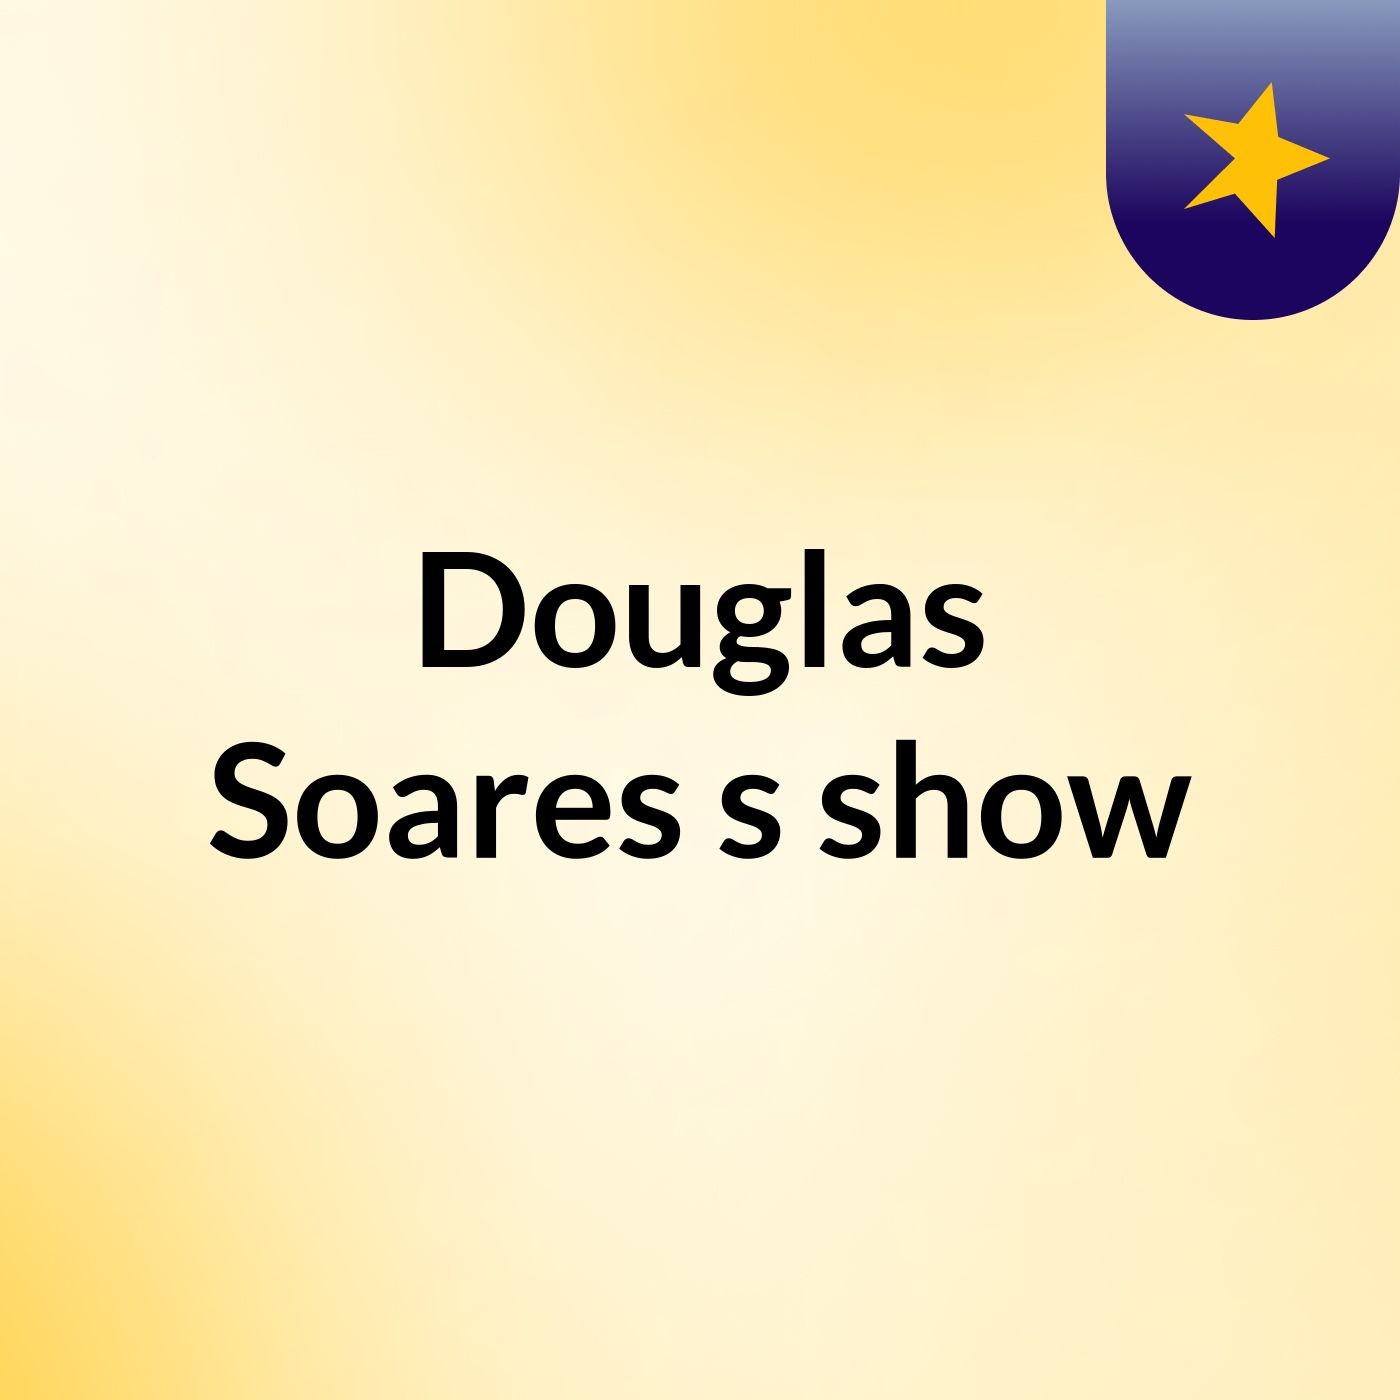 Douglas Soares's show